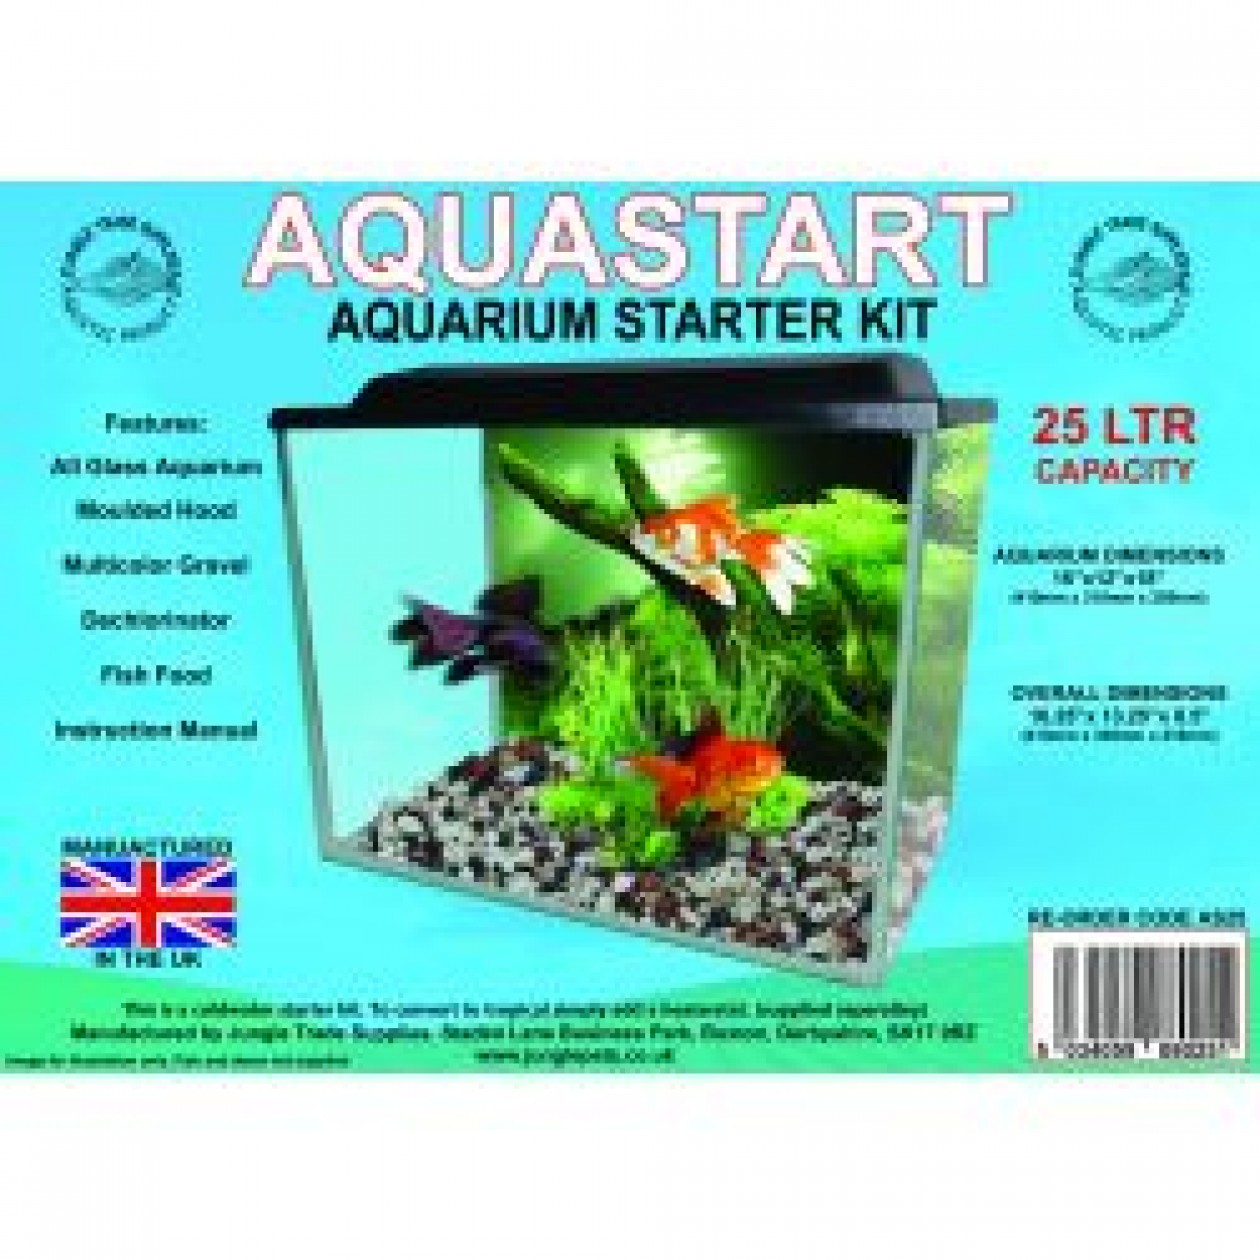 Aquastart Aquarium Starter Kit, 25ltr